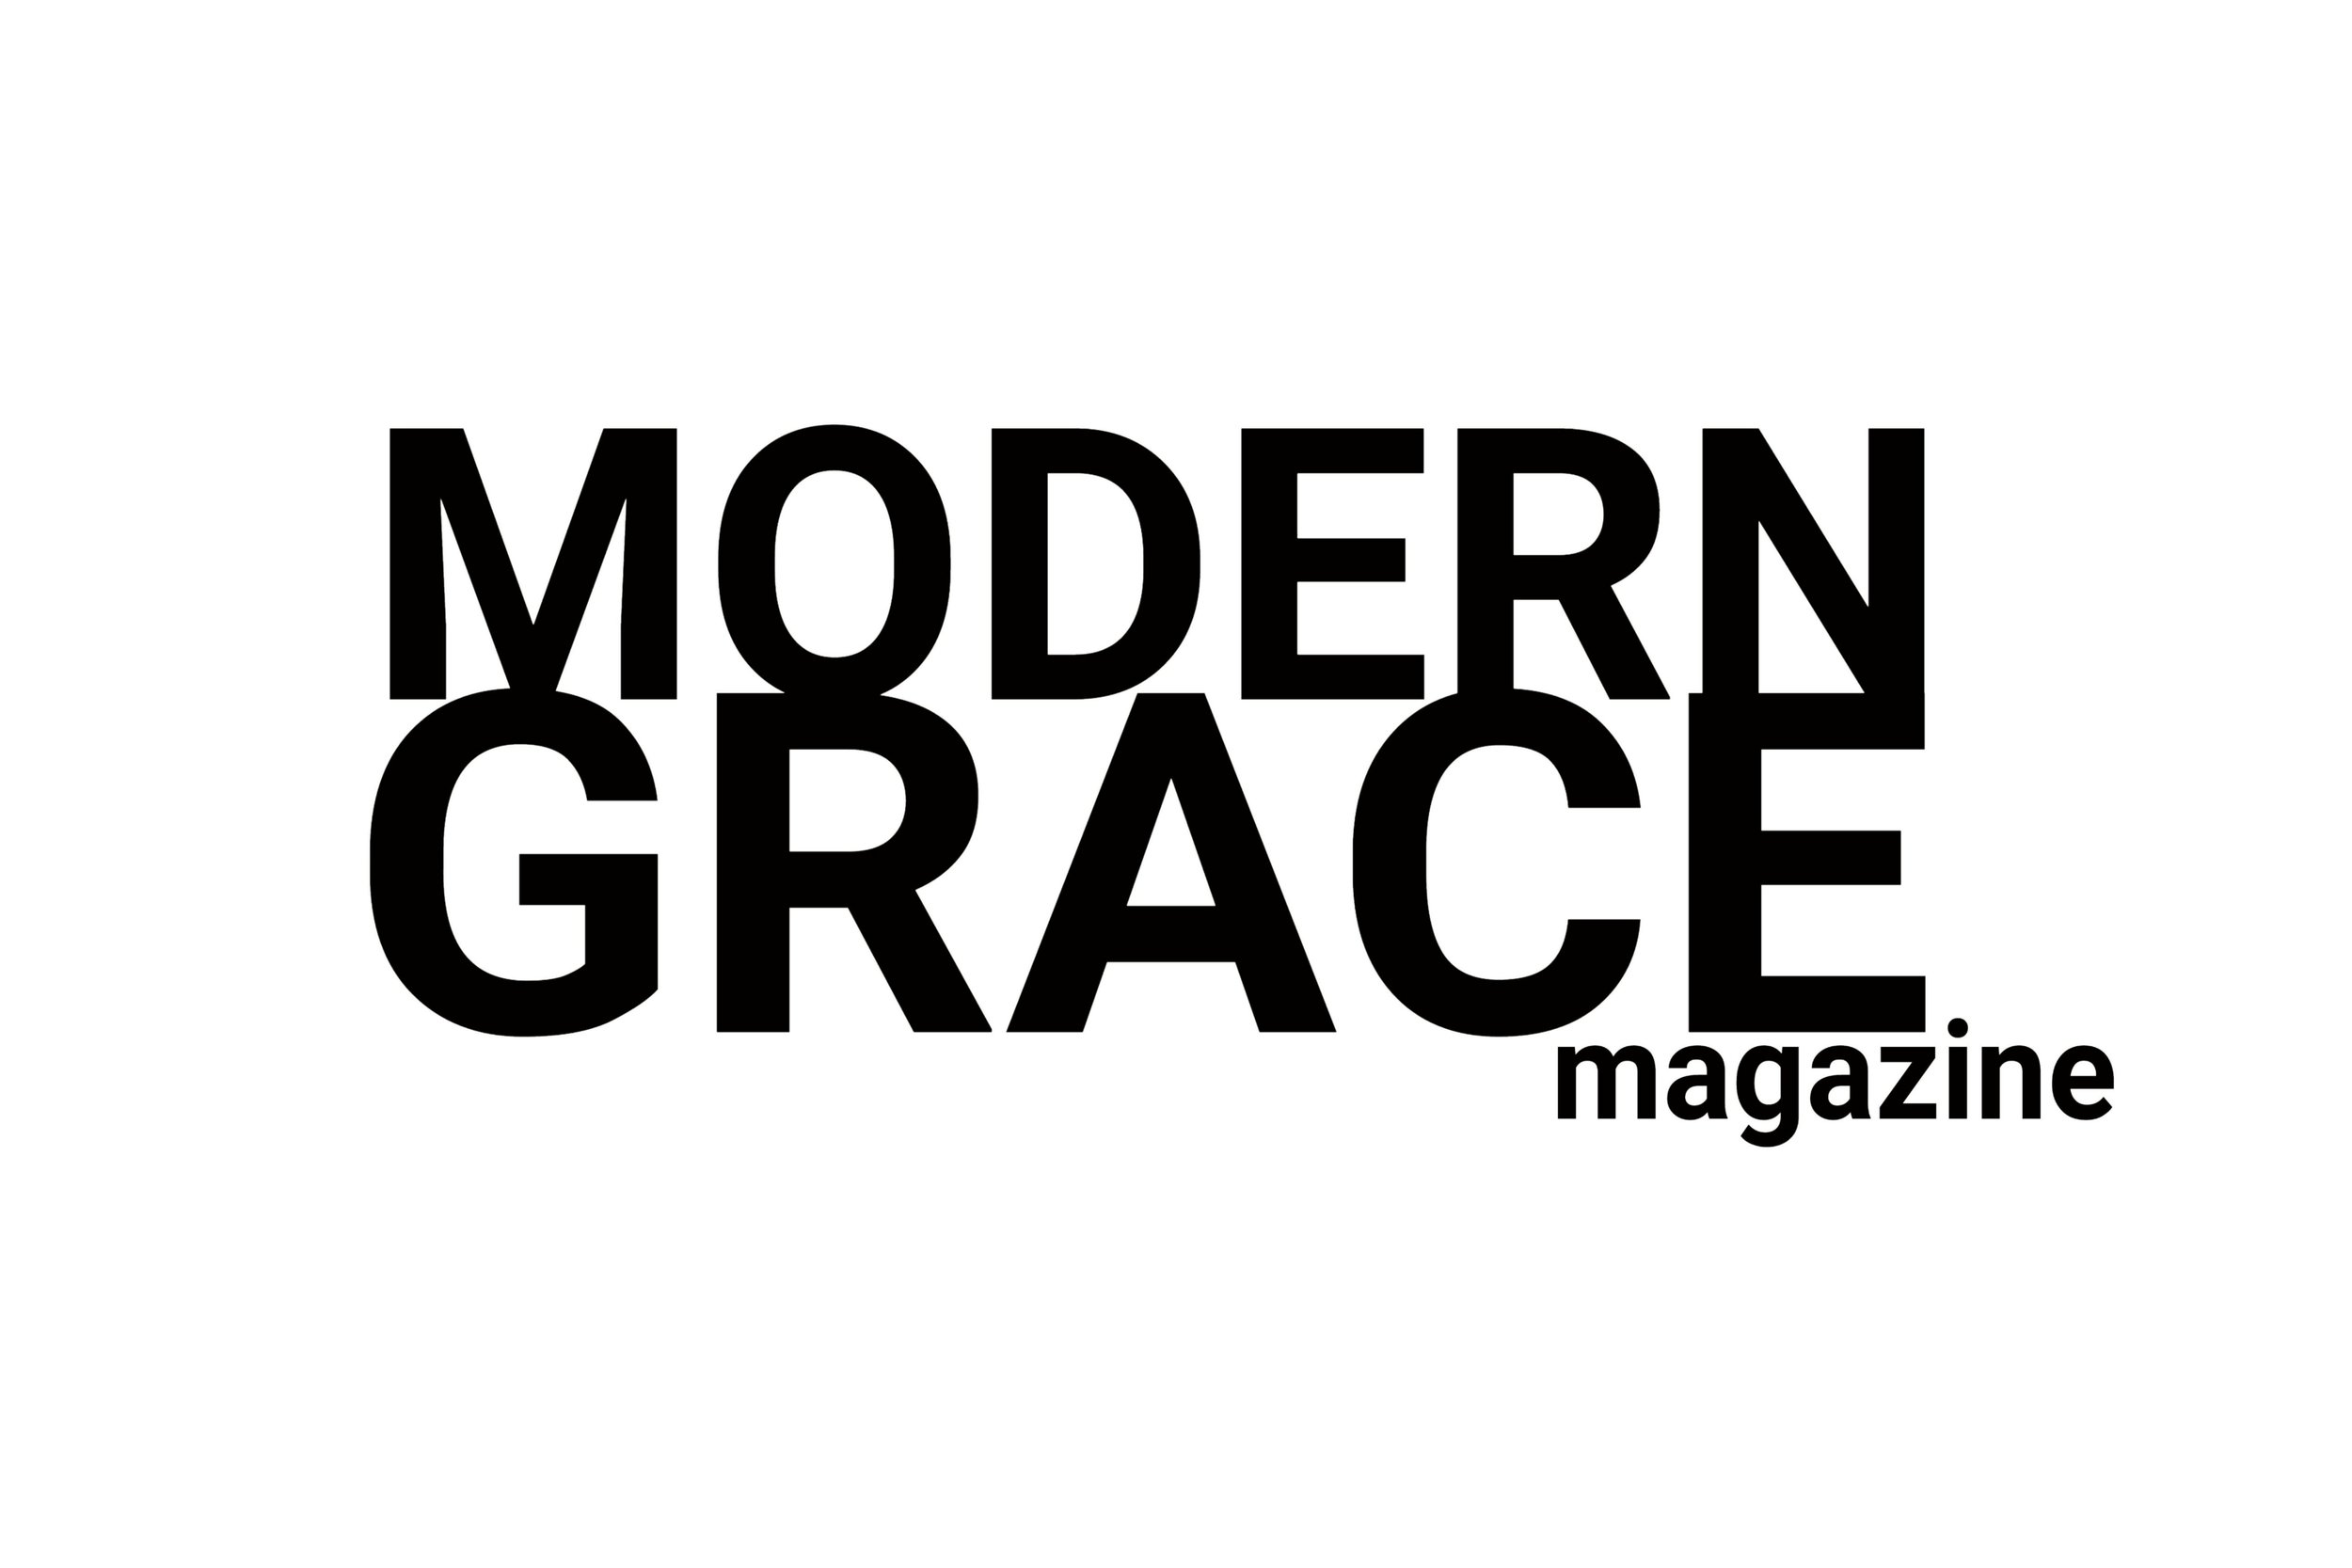 MODERN GRACE magazine